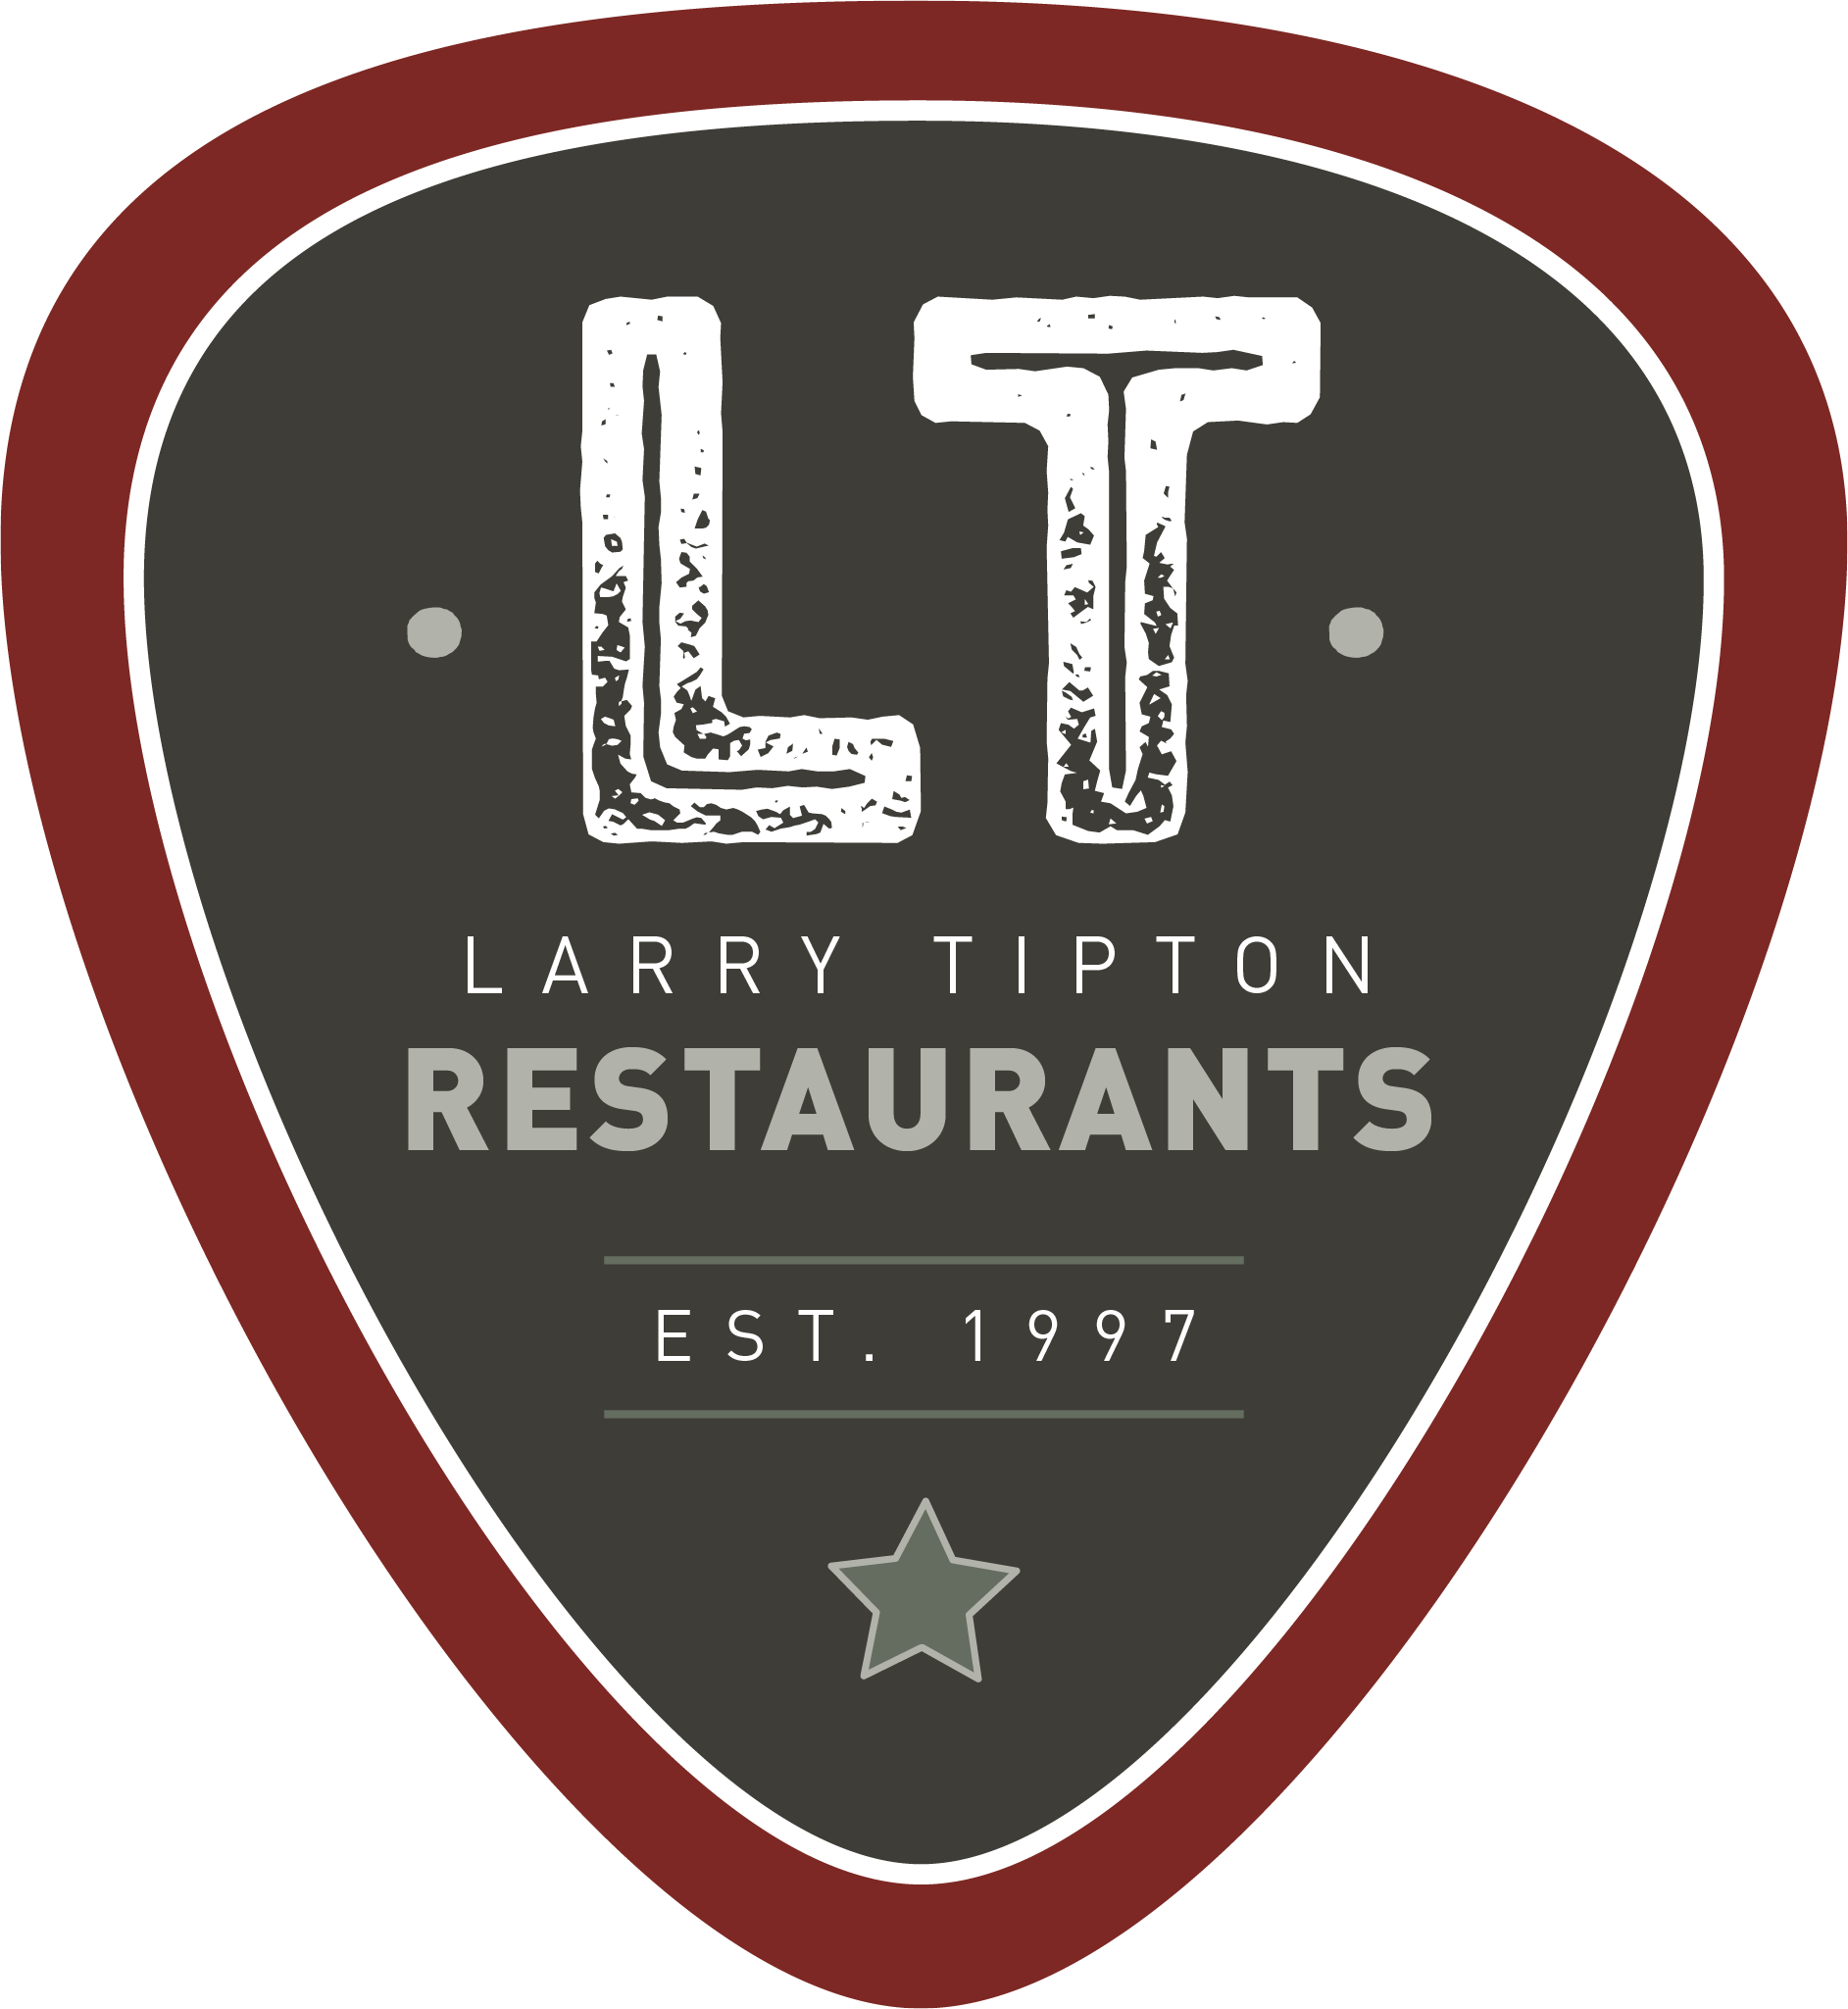 Larry Tipton Restaurants